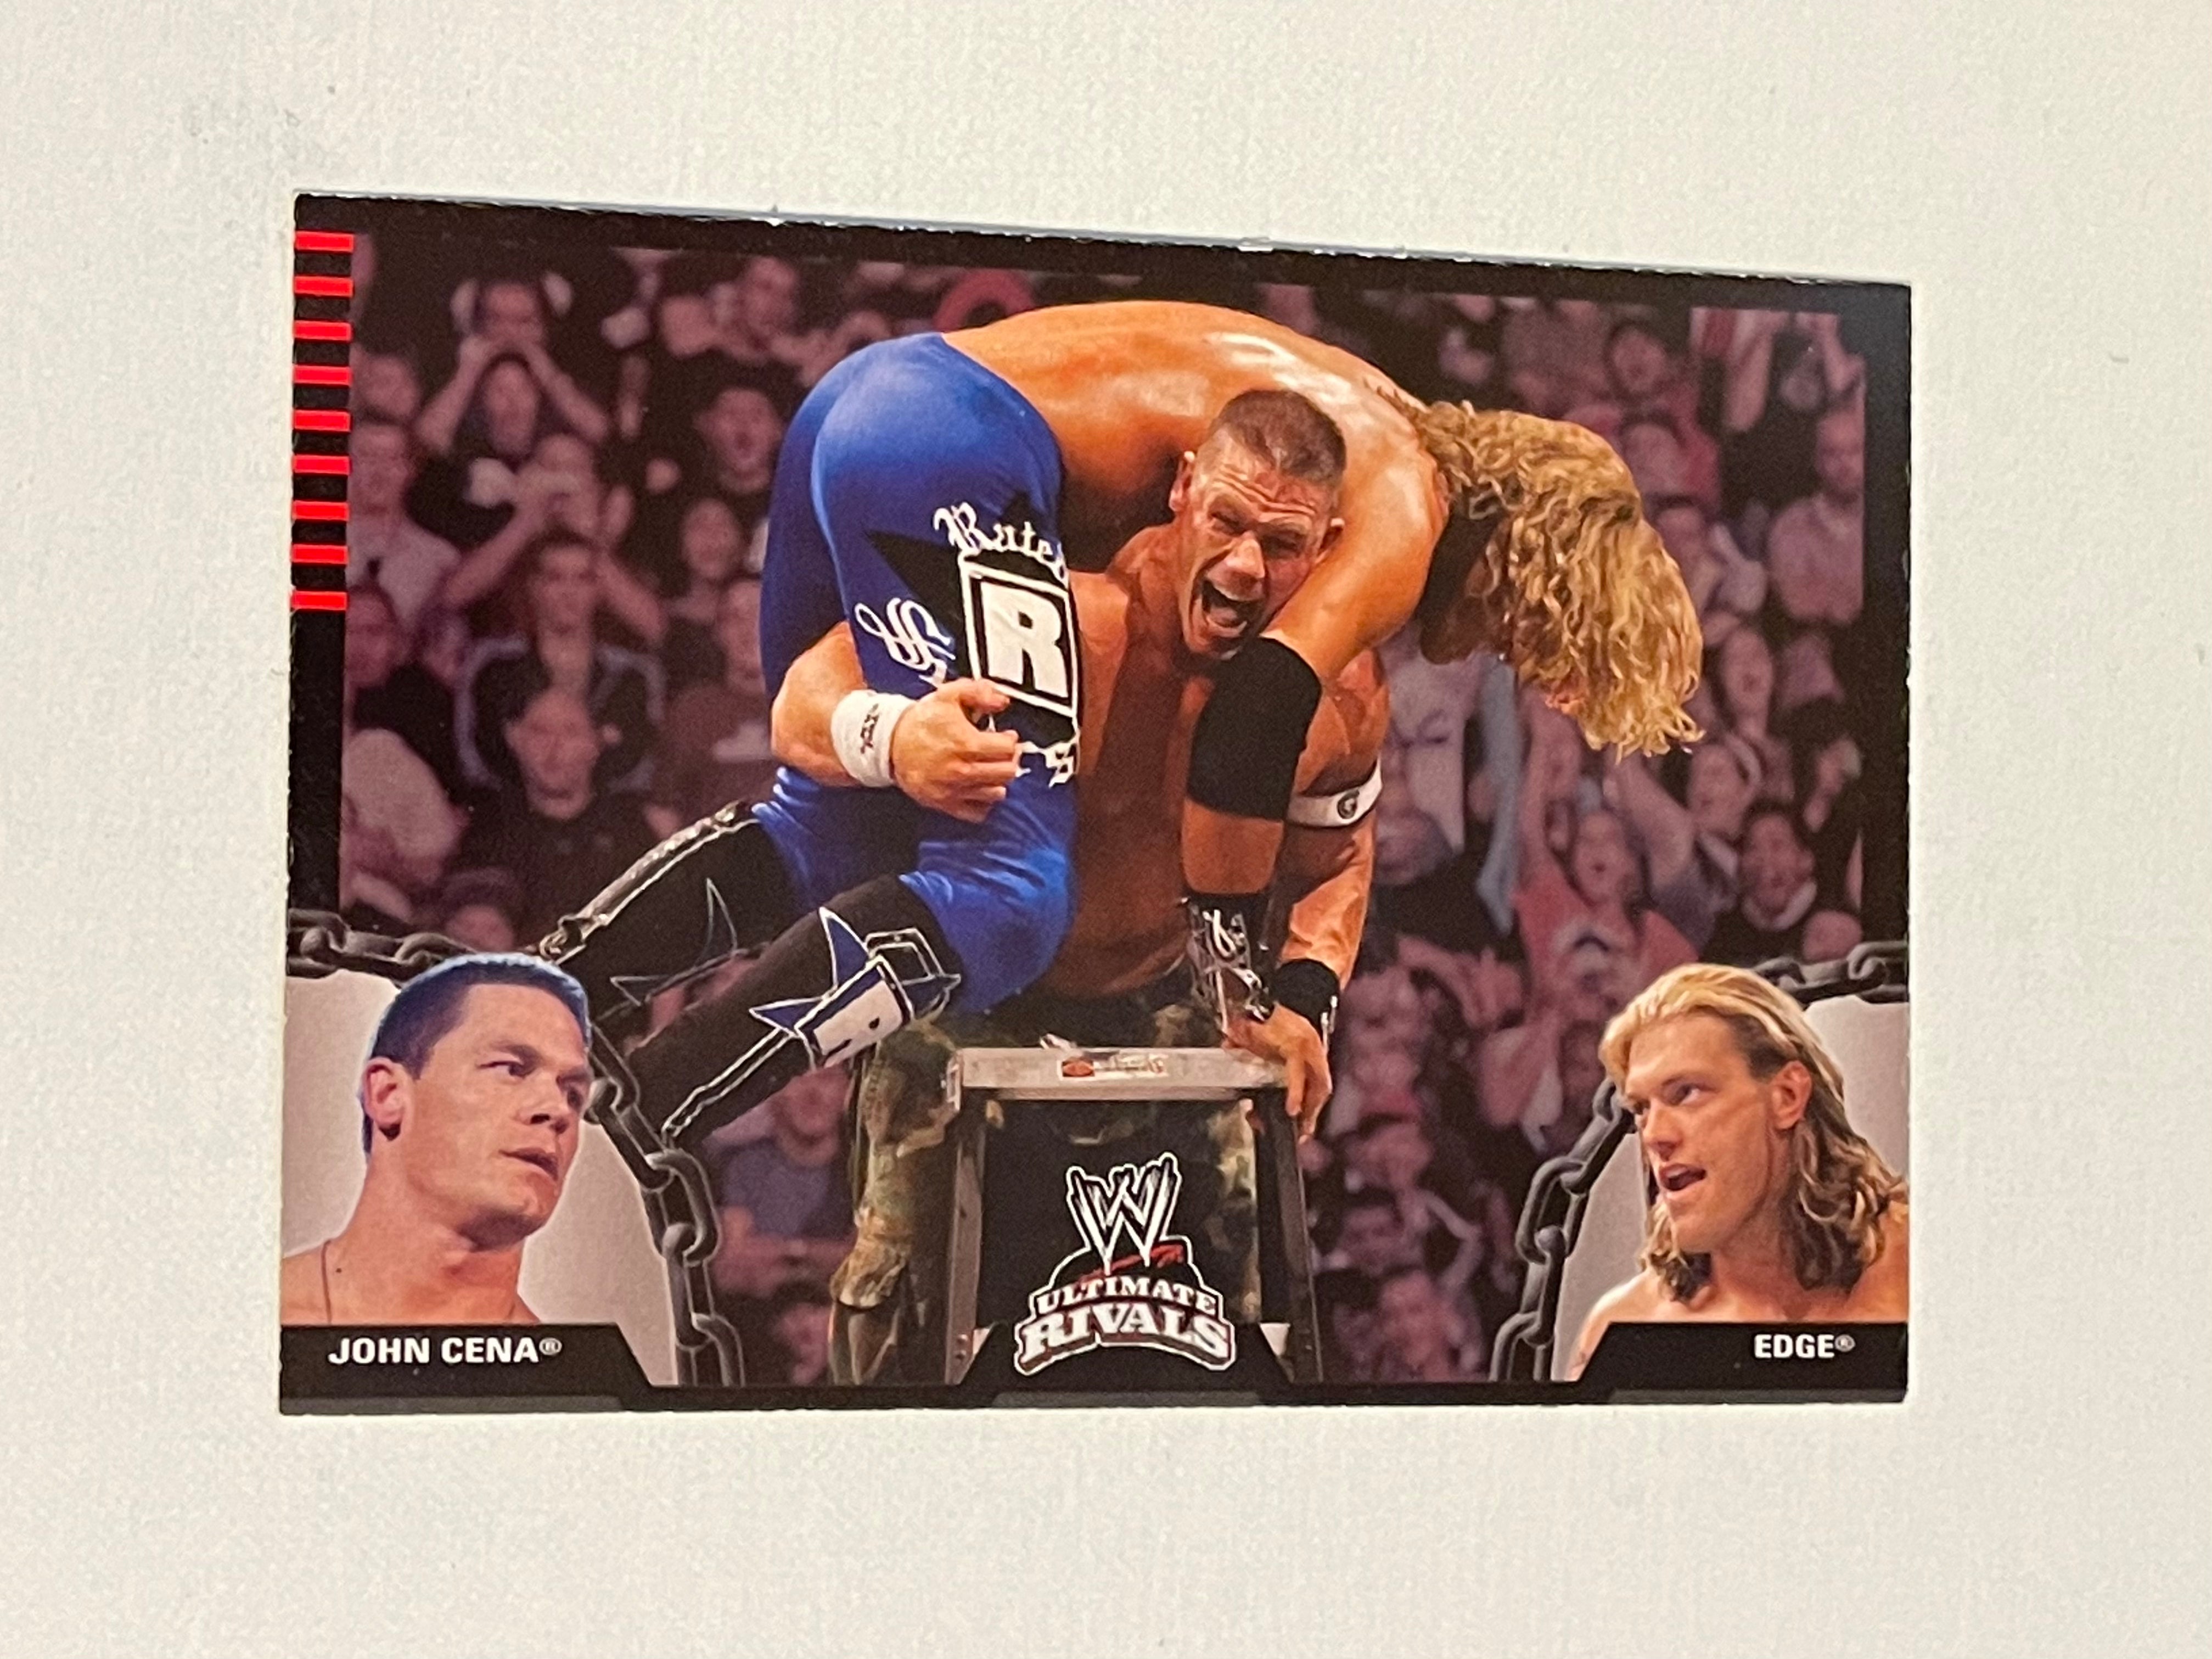 WWF wresting John Cena and Edge promo card 2008